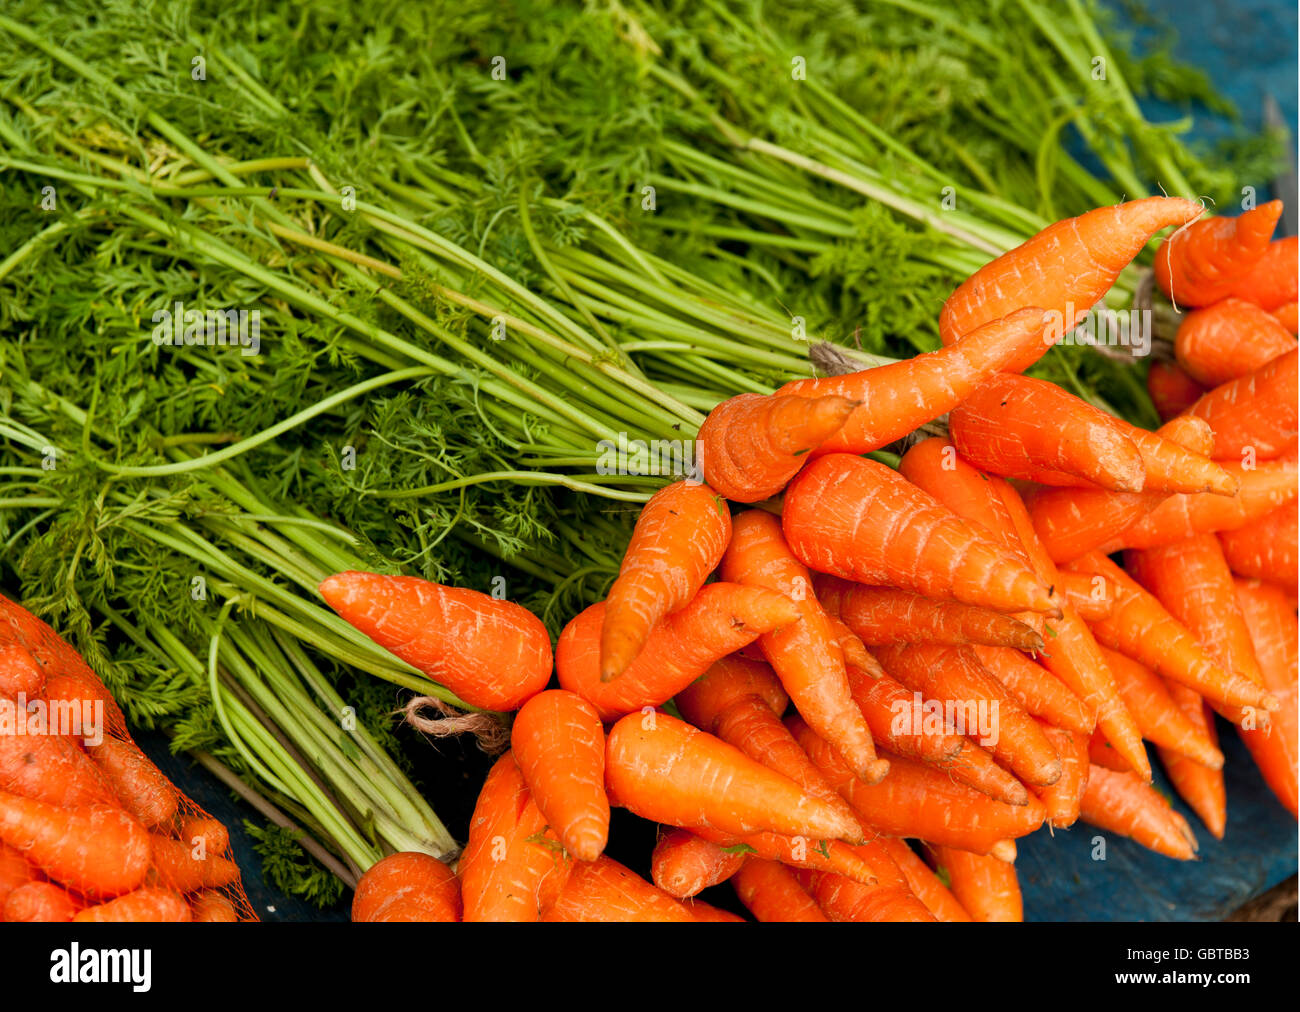 Display of fresh farm raw organic carrots with green leafy stems. Stock Photo